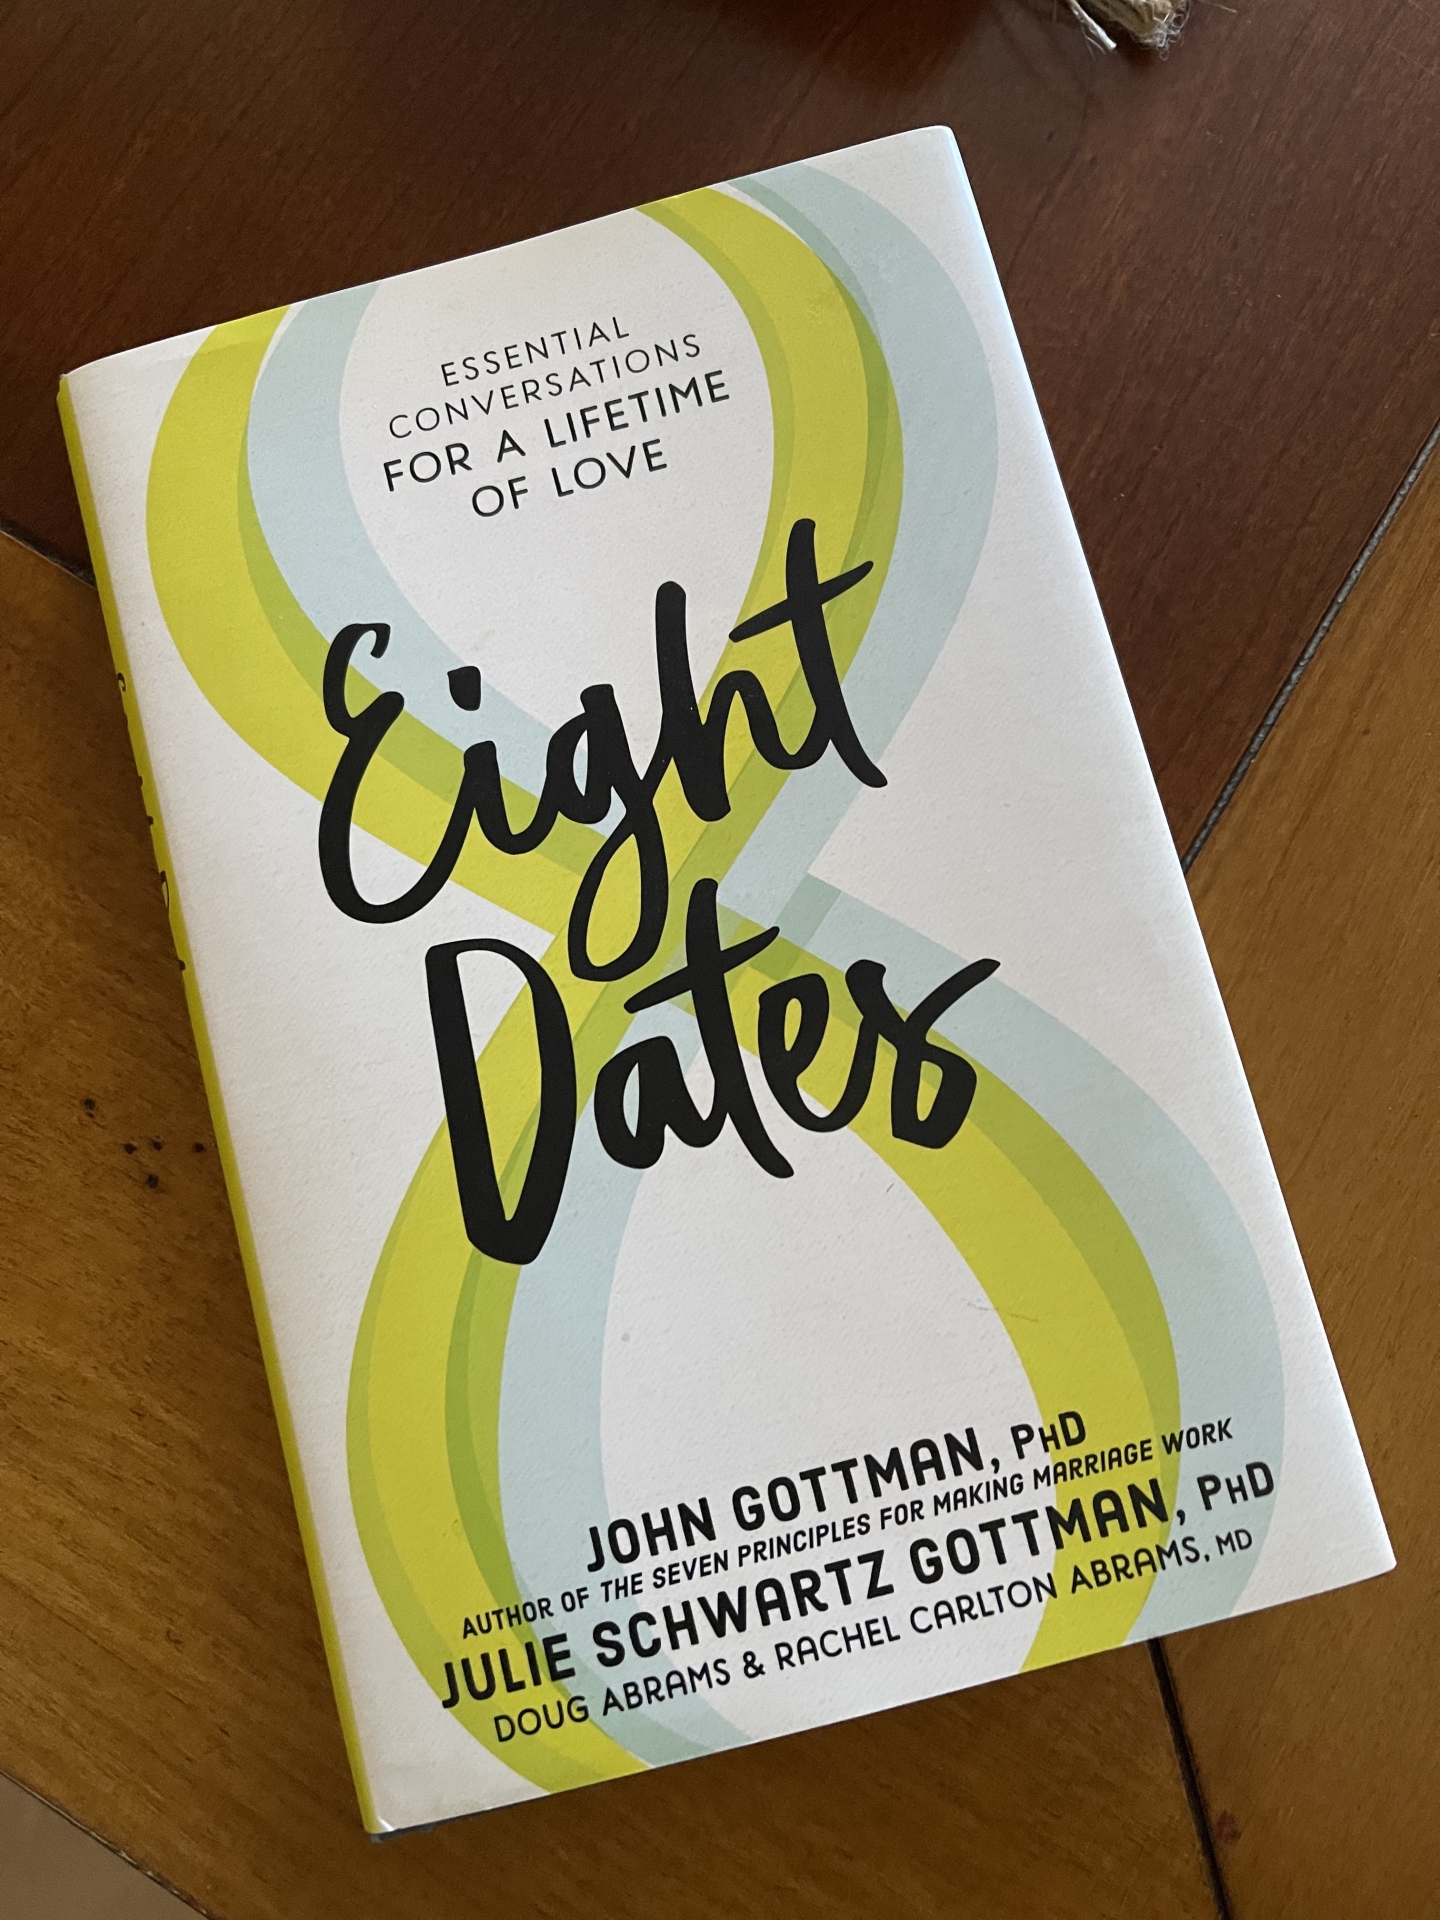 Eight Dates by John Gottman, Ph.D.